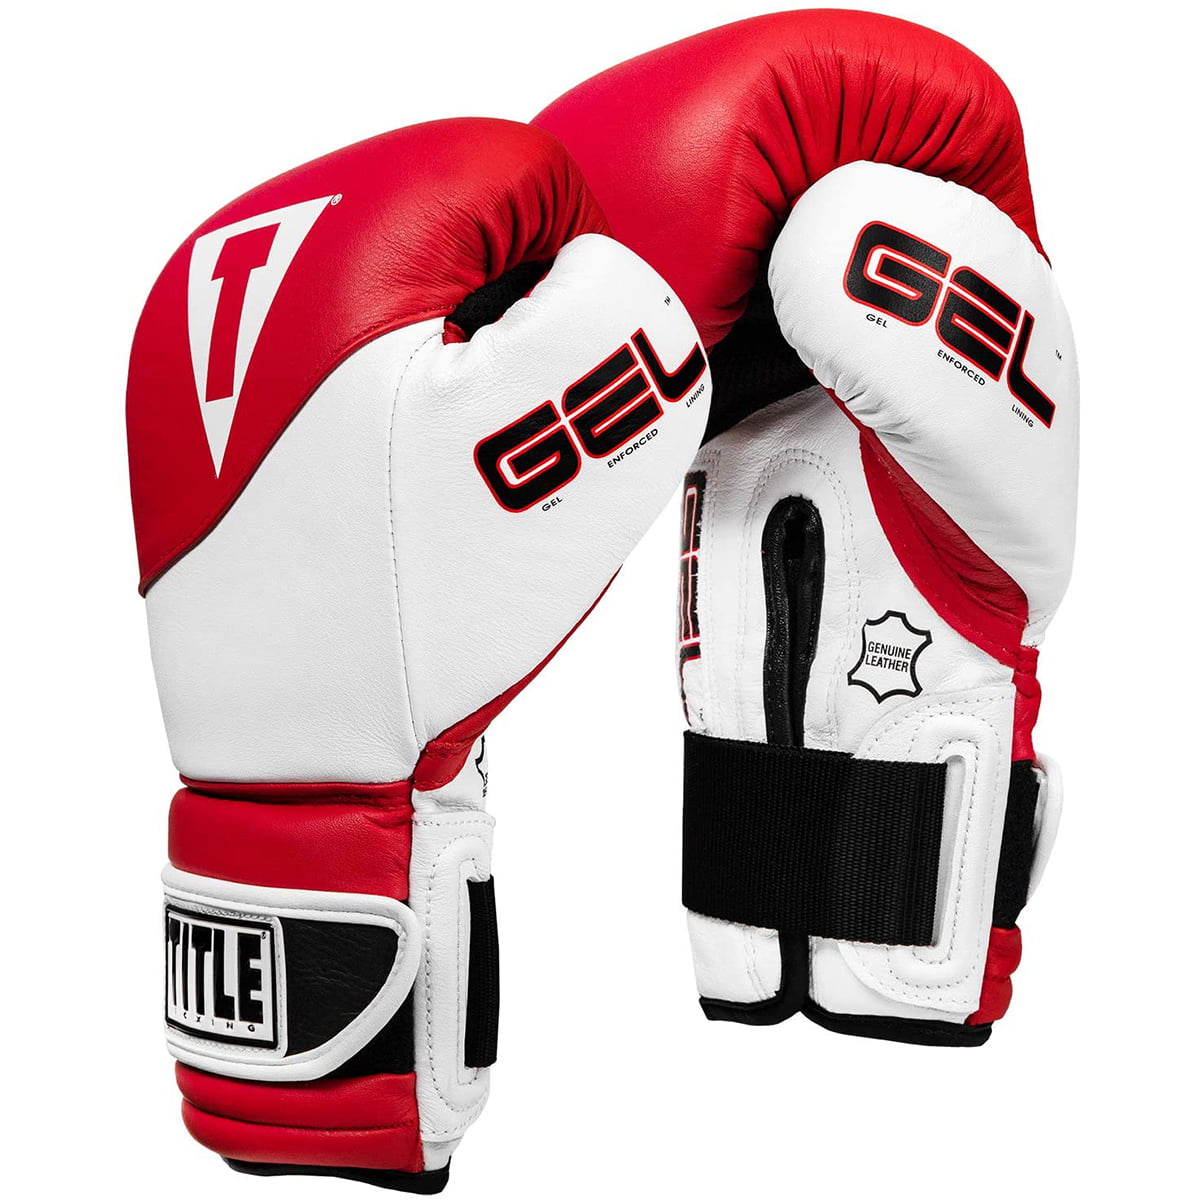 Боксерские перчатки title Gel Suspense. Everlast перчатки красно белые.. Перчатки 18 унций. Перчатки 14 унций. Tactic boxing